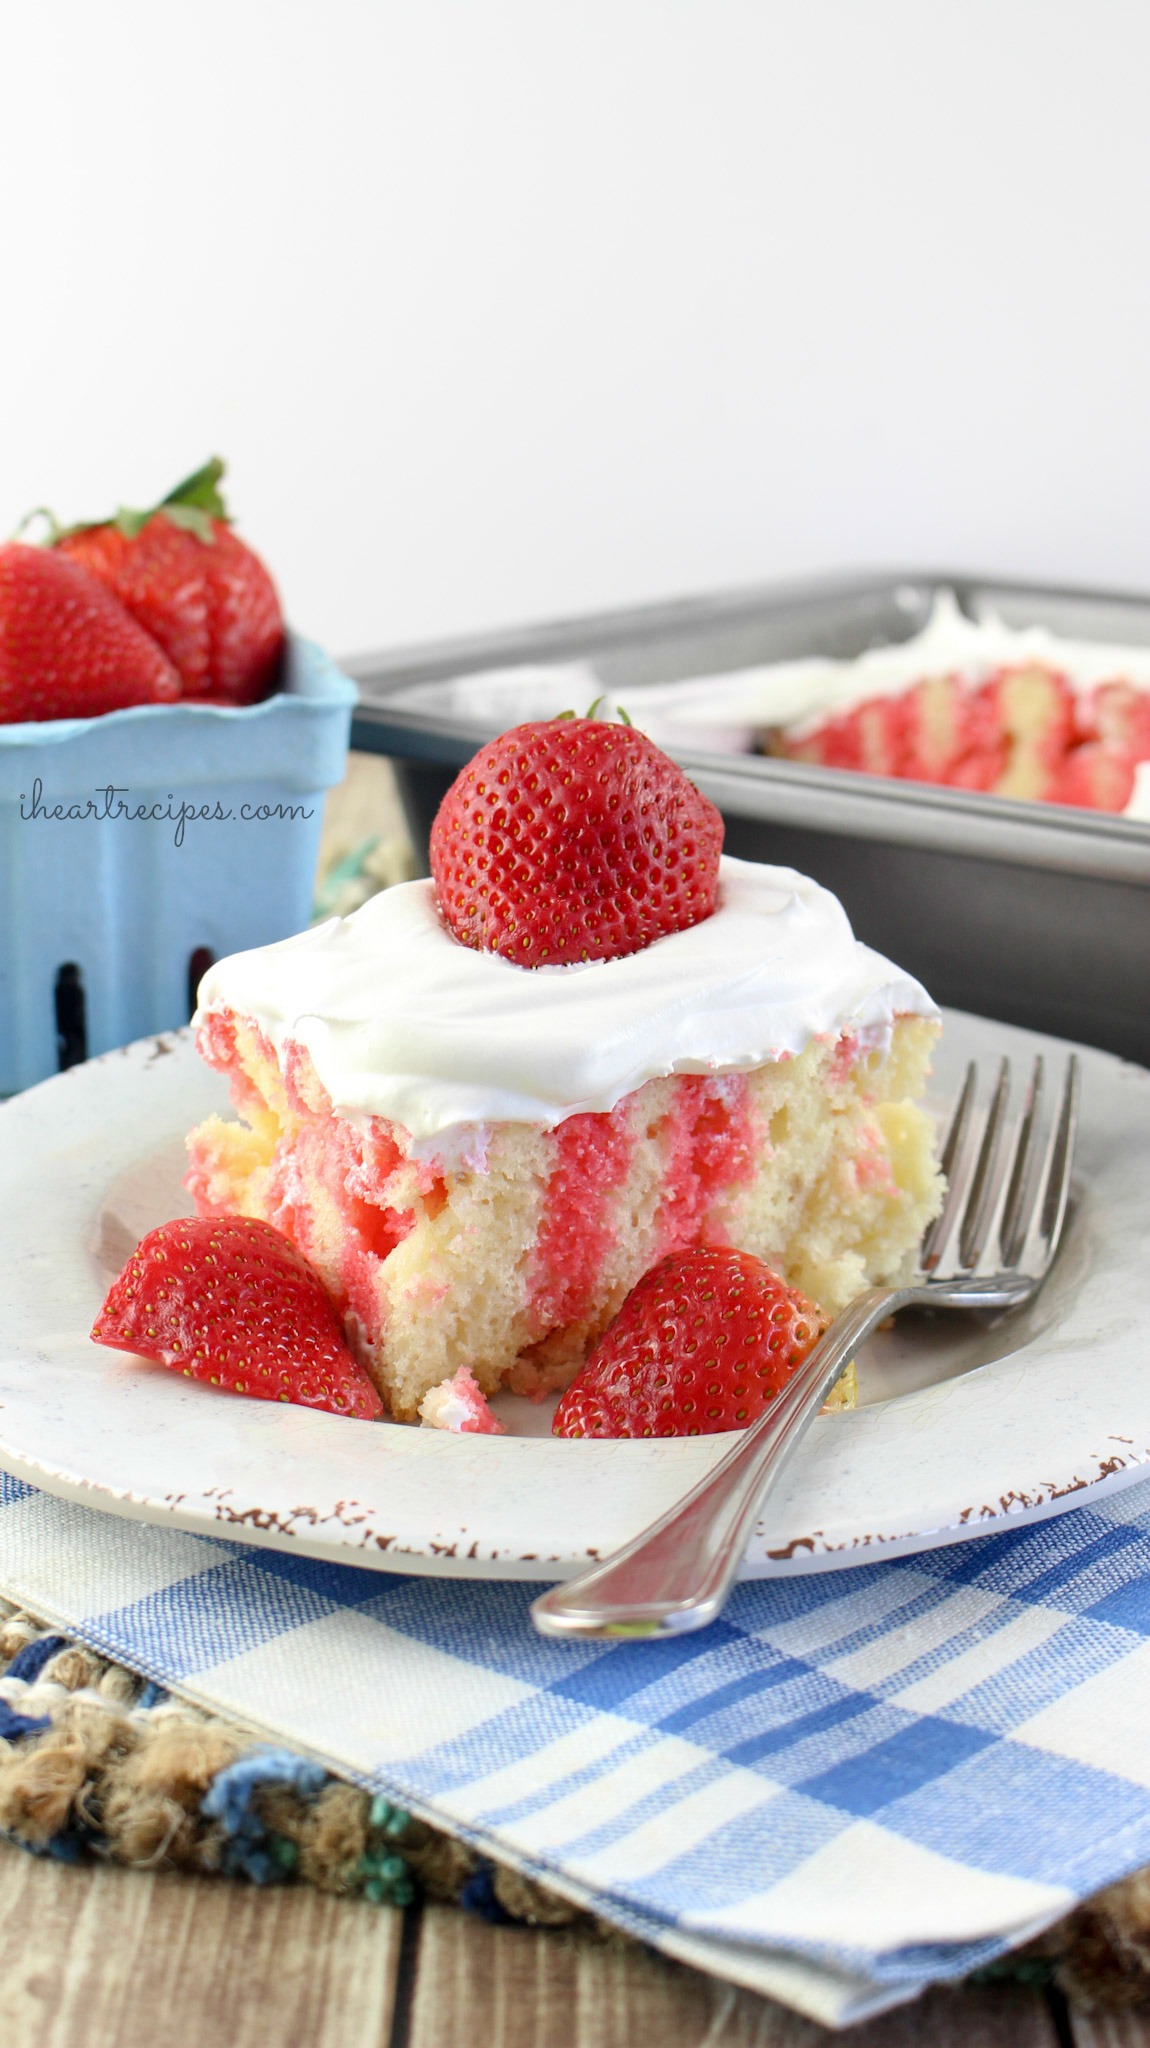 Creamy swirls of strawberry Jello and moist yellow cake make this poke cake a delicious dessert